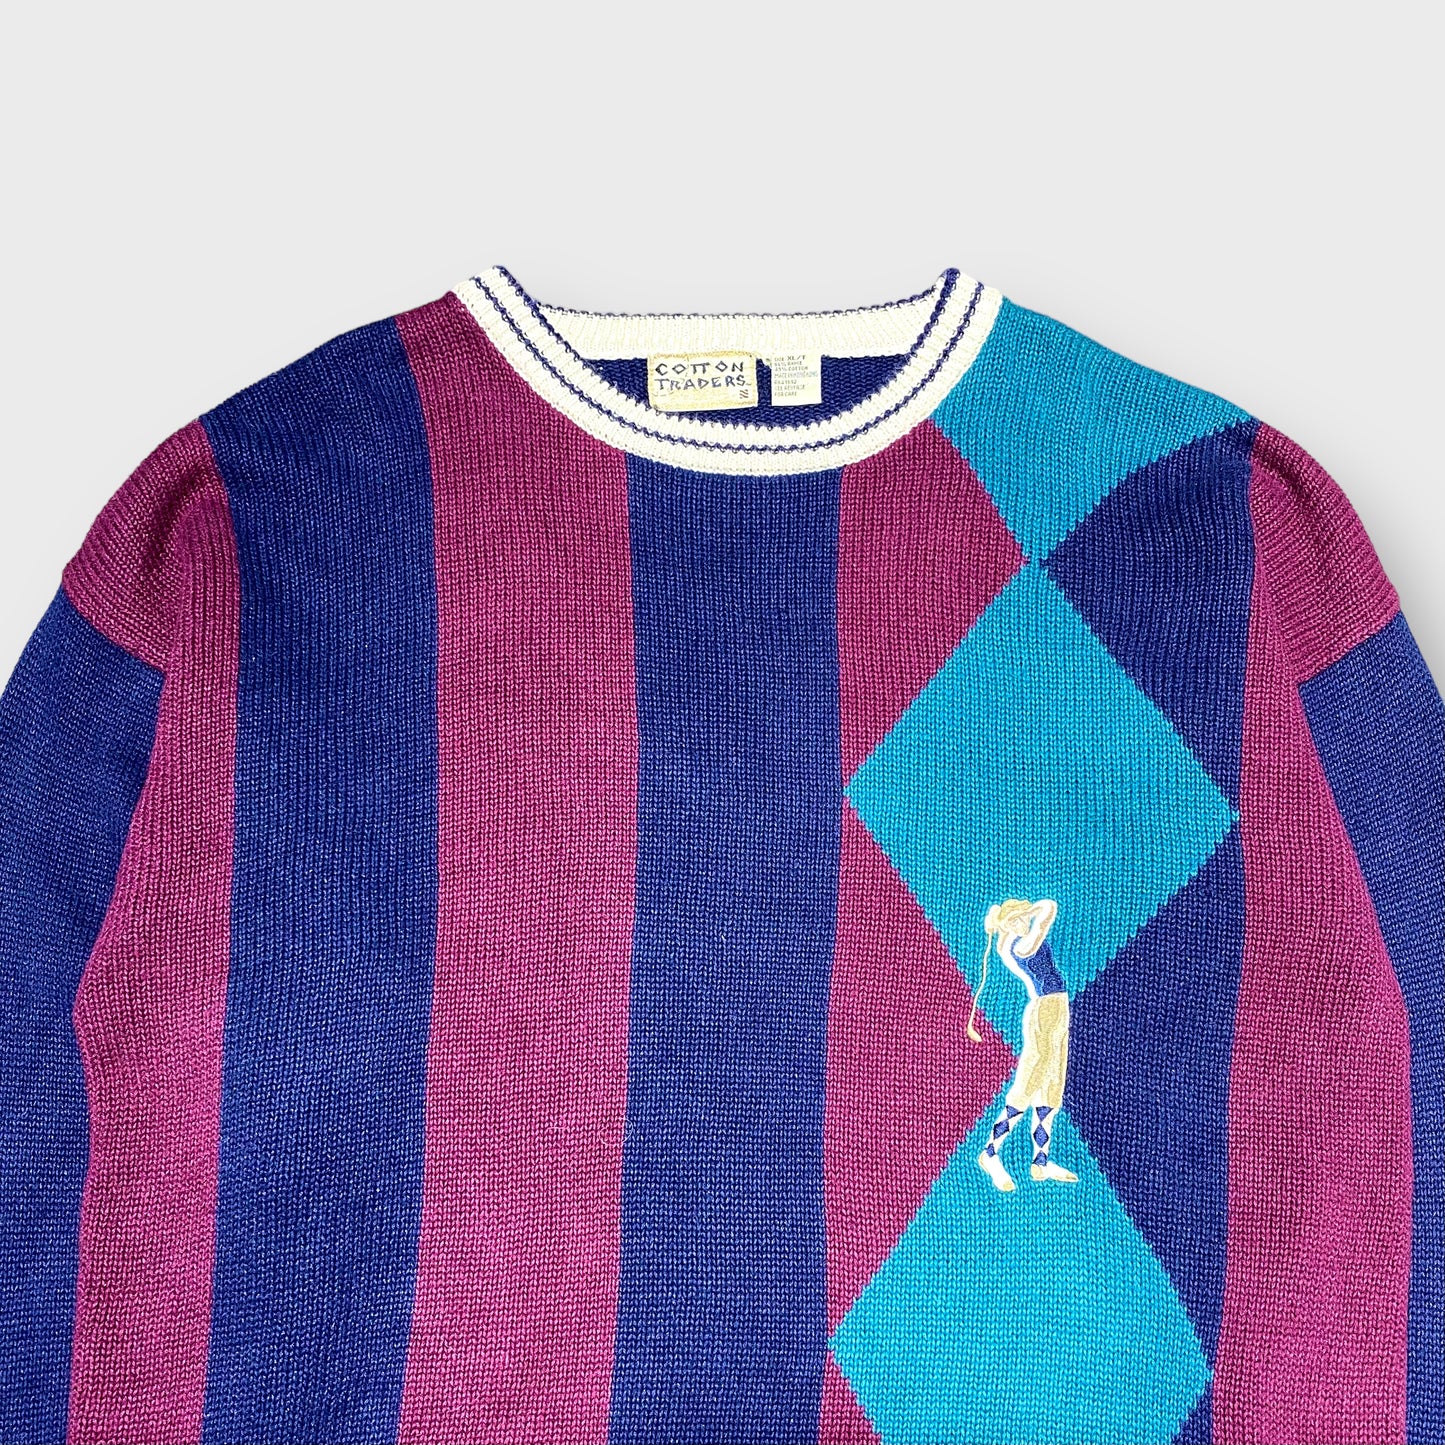 Stripe × argyle pattern golf knit sweater